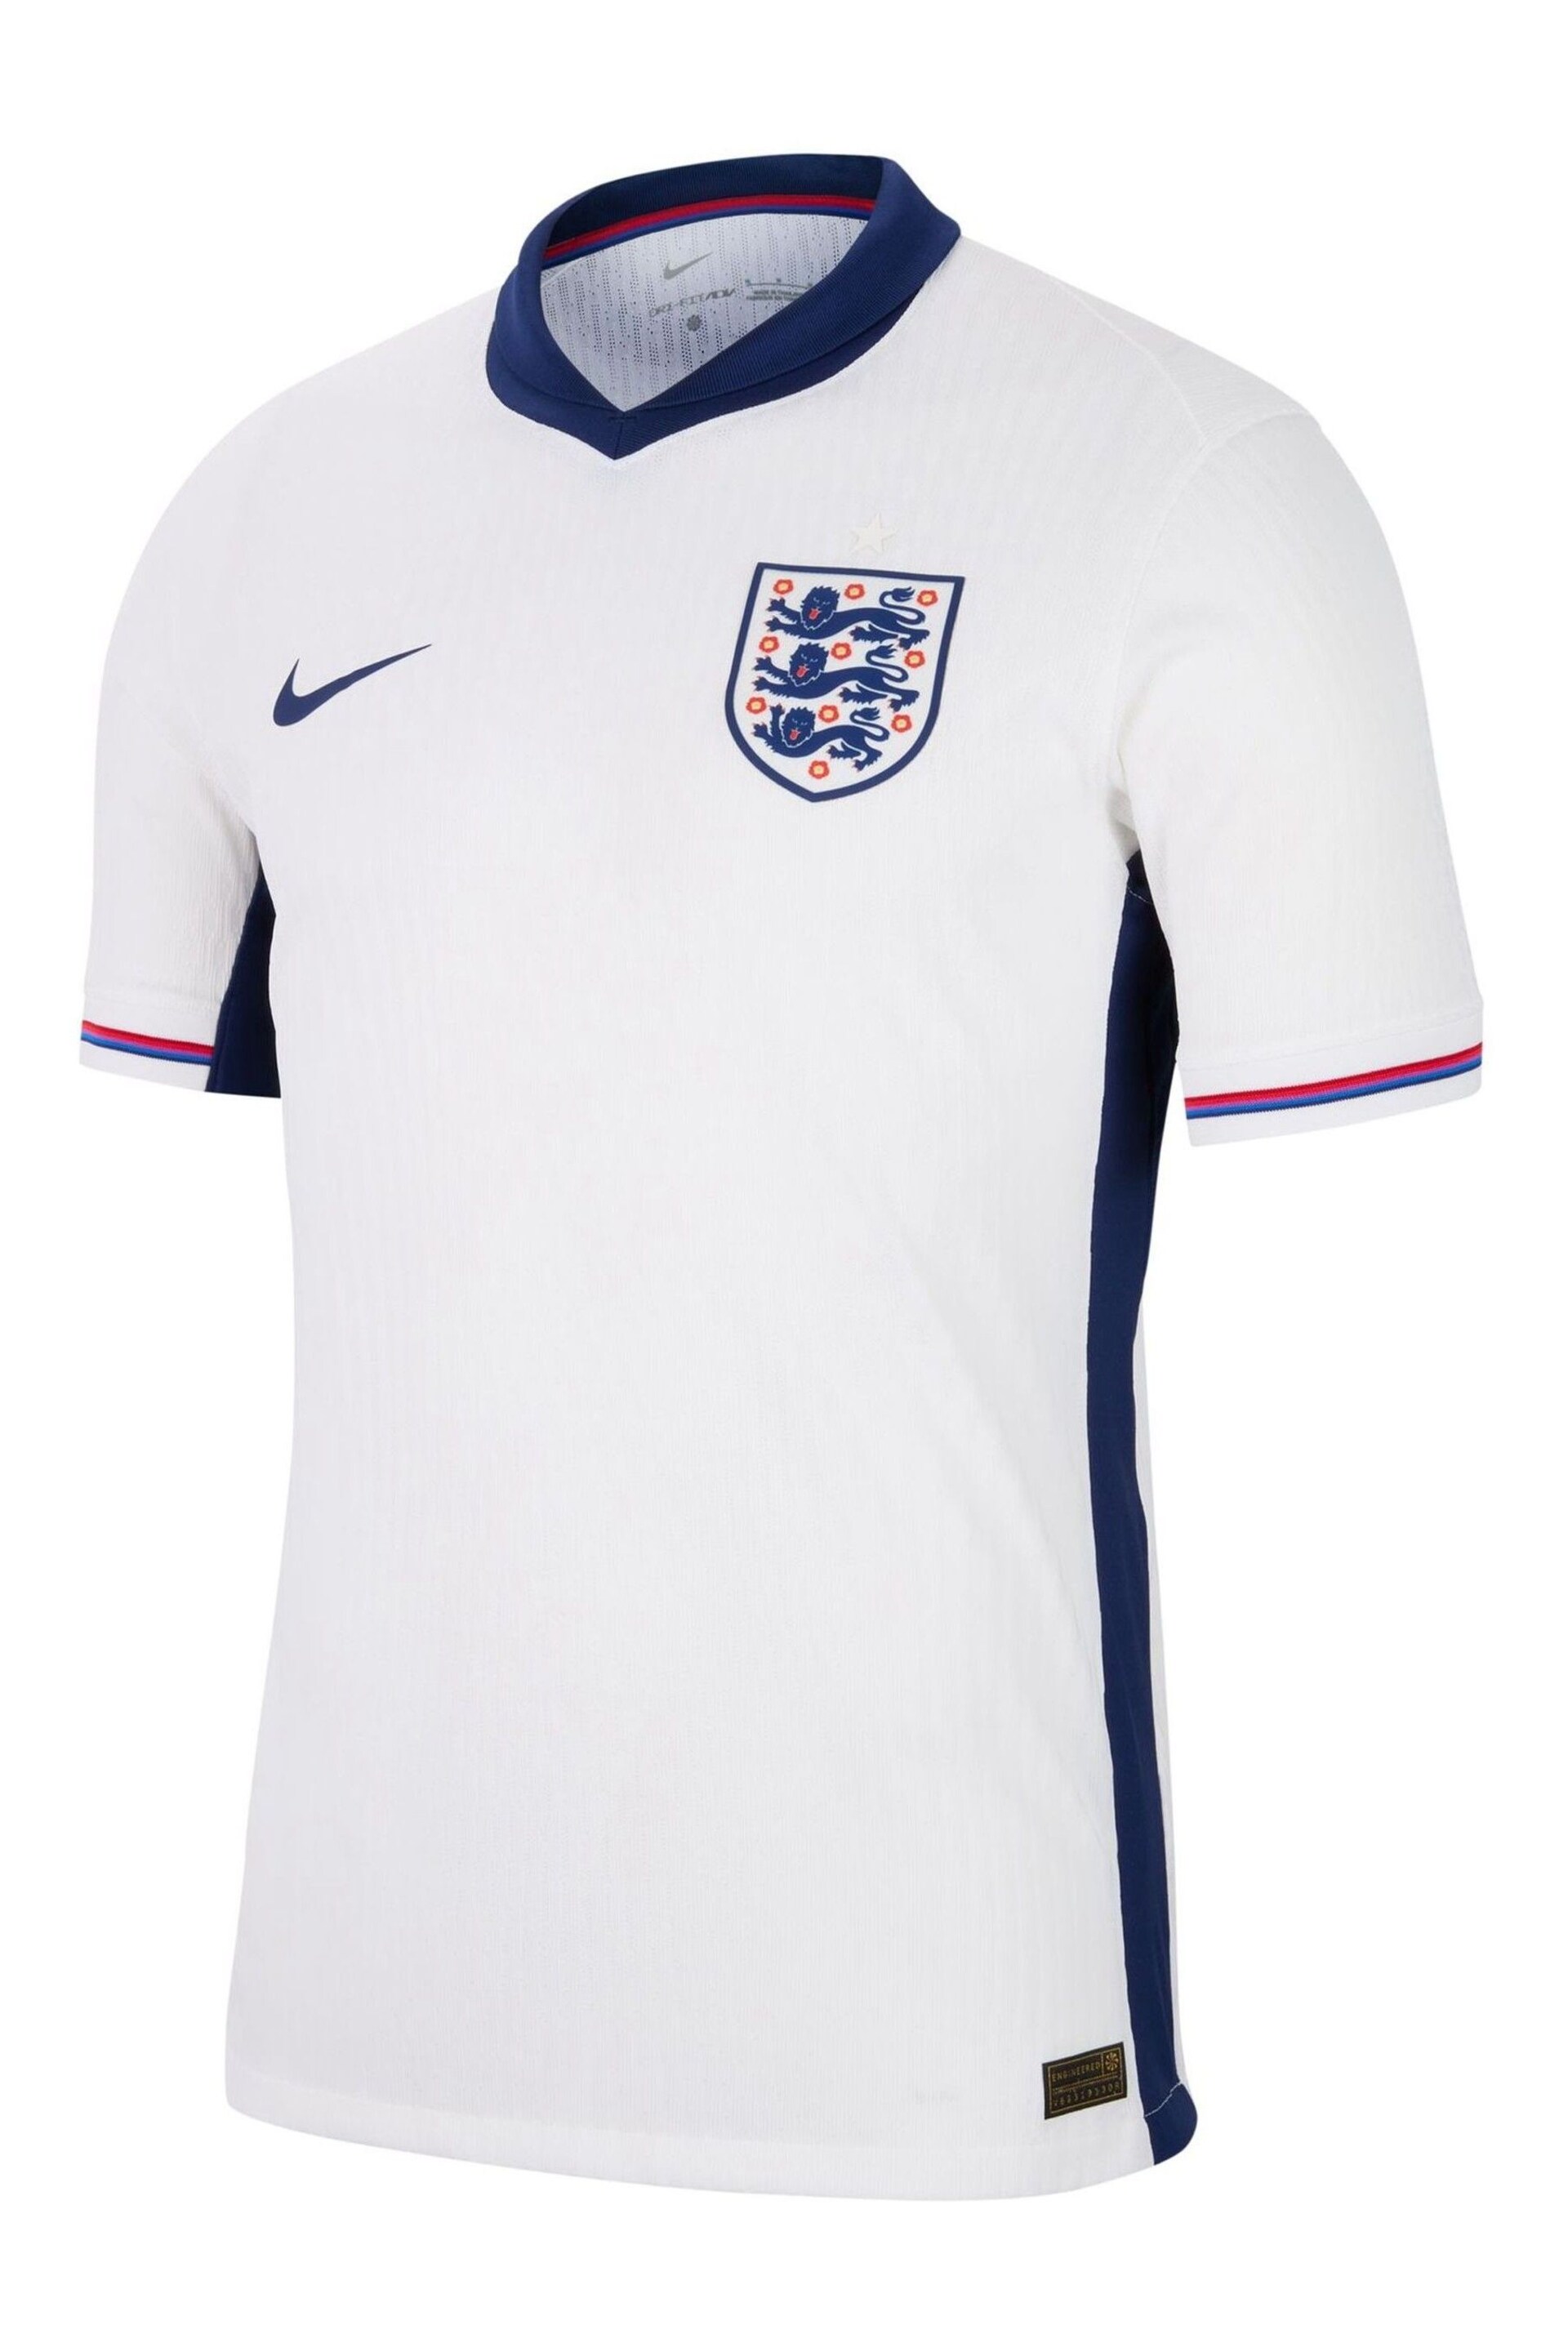 Nike White Dri-FIT England Match Football Shirt - Image 11 of 13